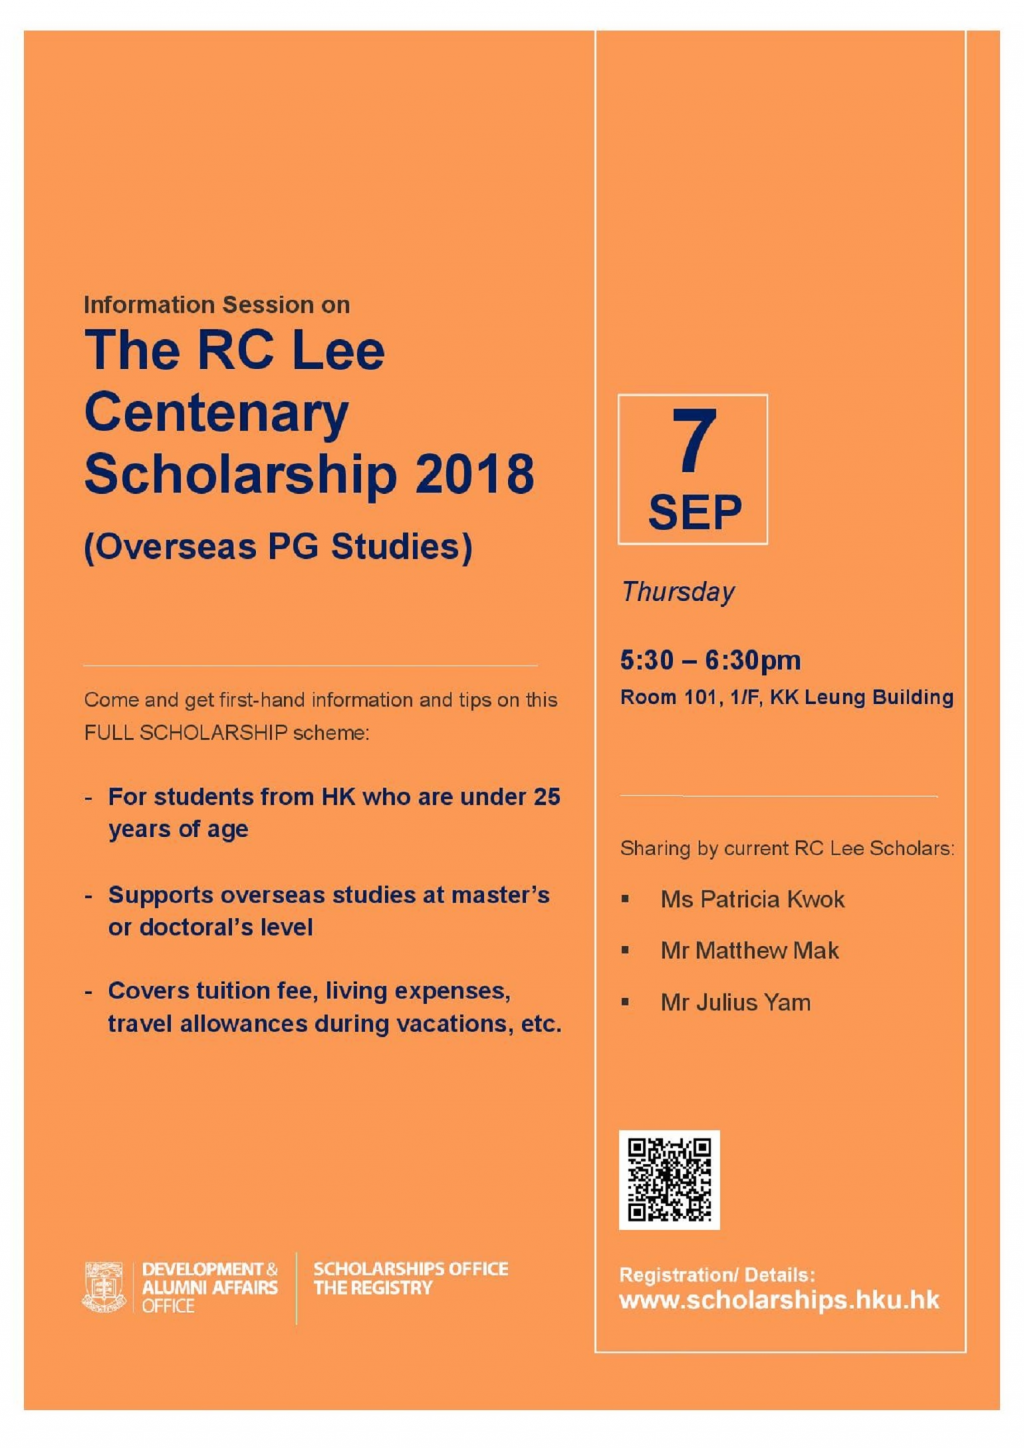 The RC Lee Centenary Scholarship for Overseas Postgraduate Studies